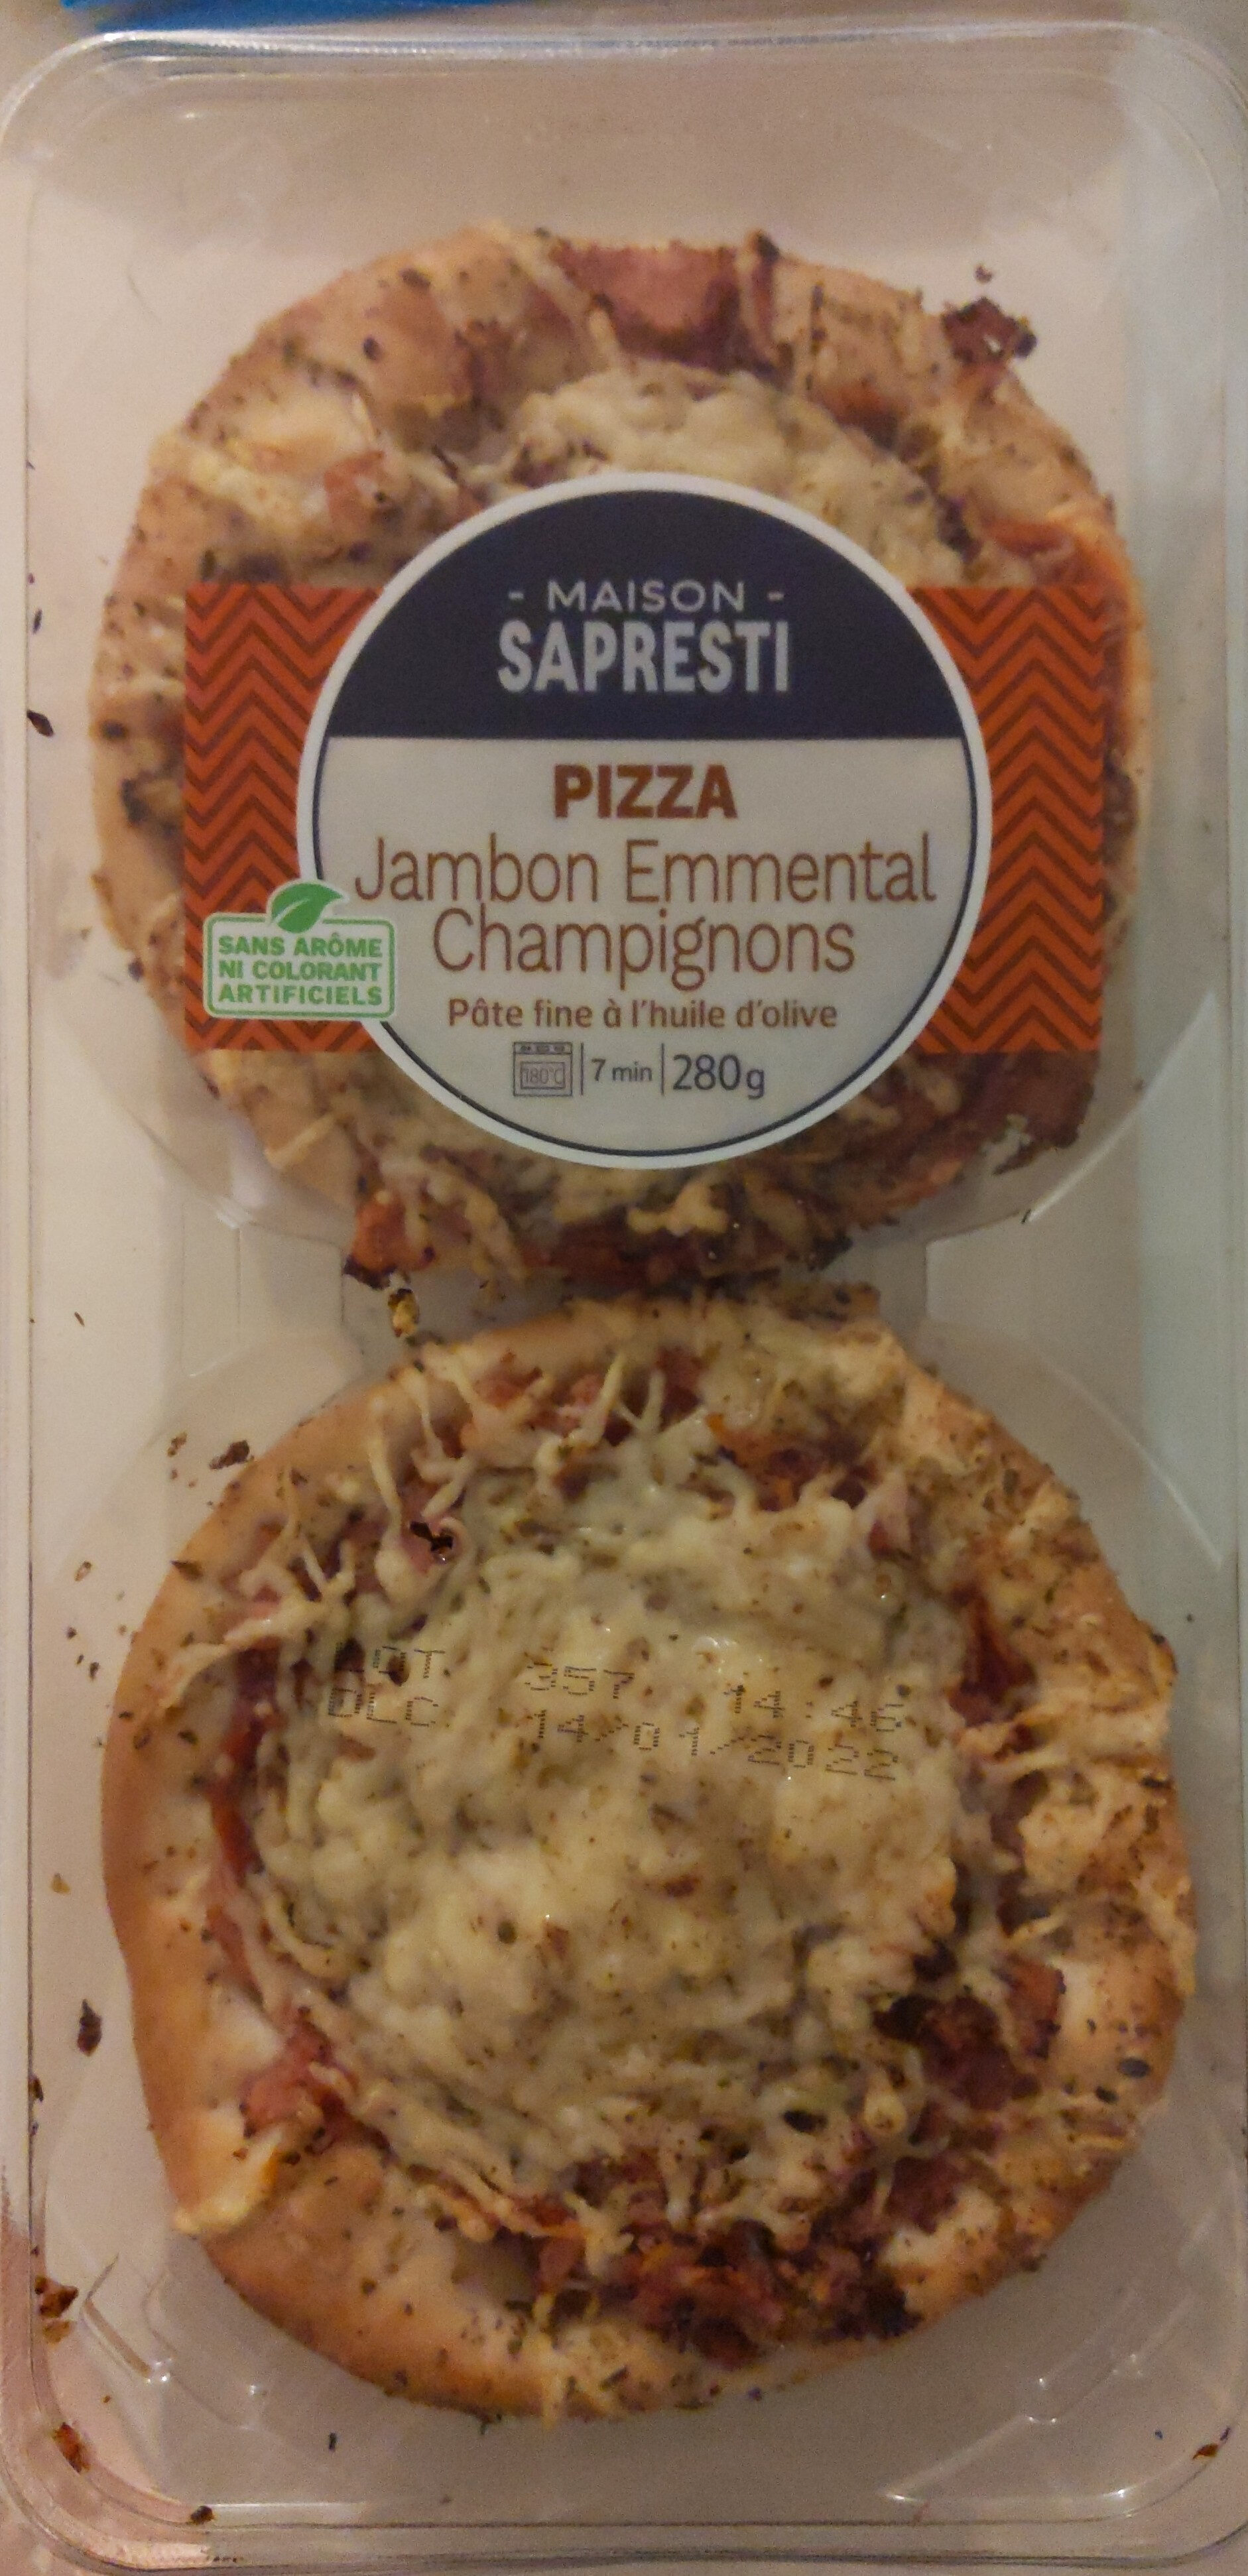 Pizza Jambon Emmental Champignons - Product - fr